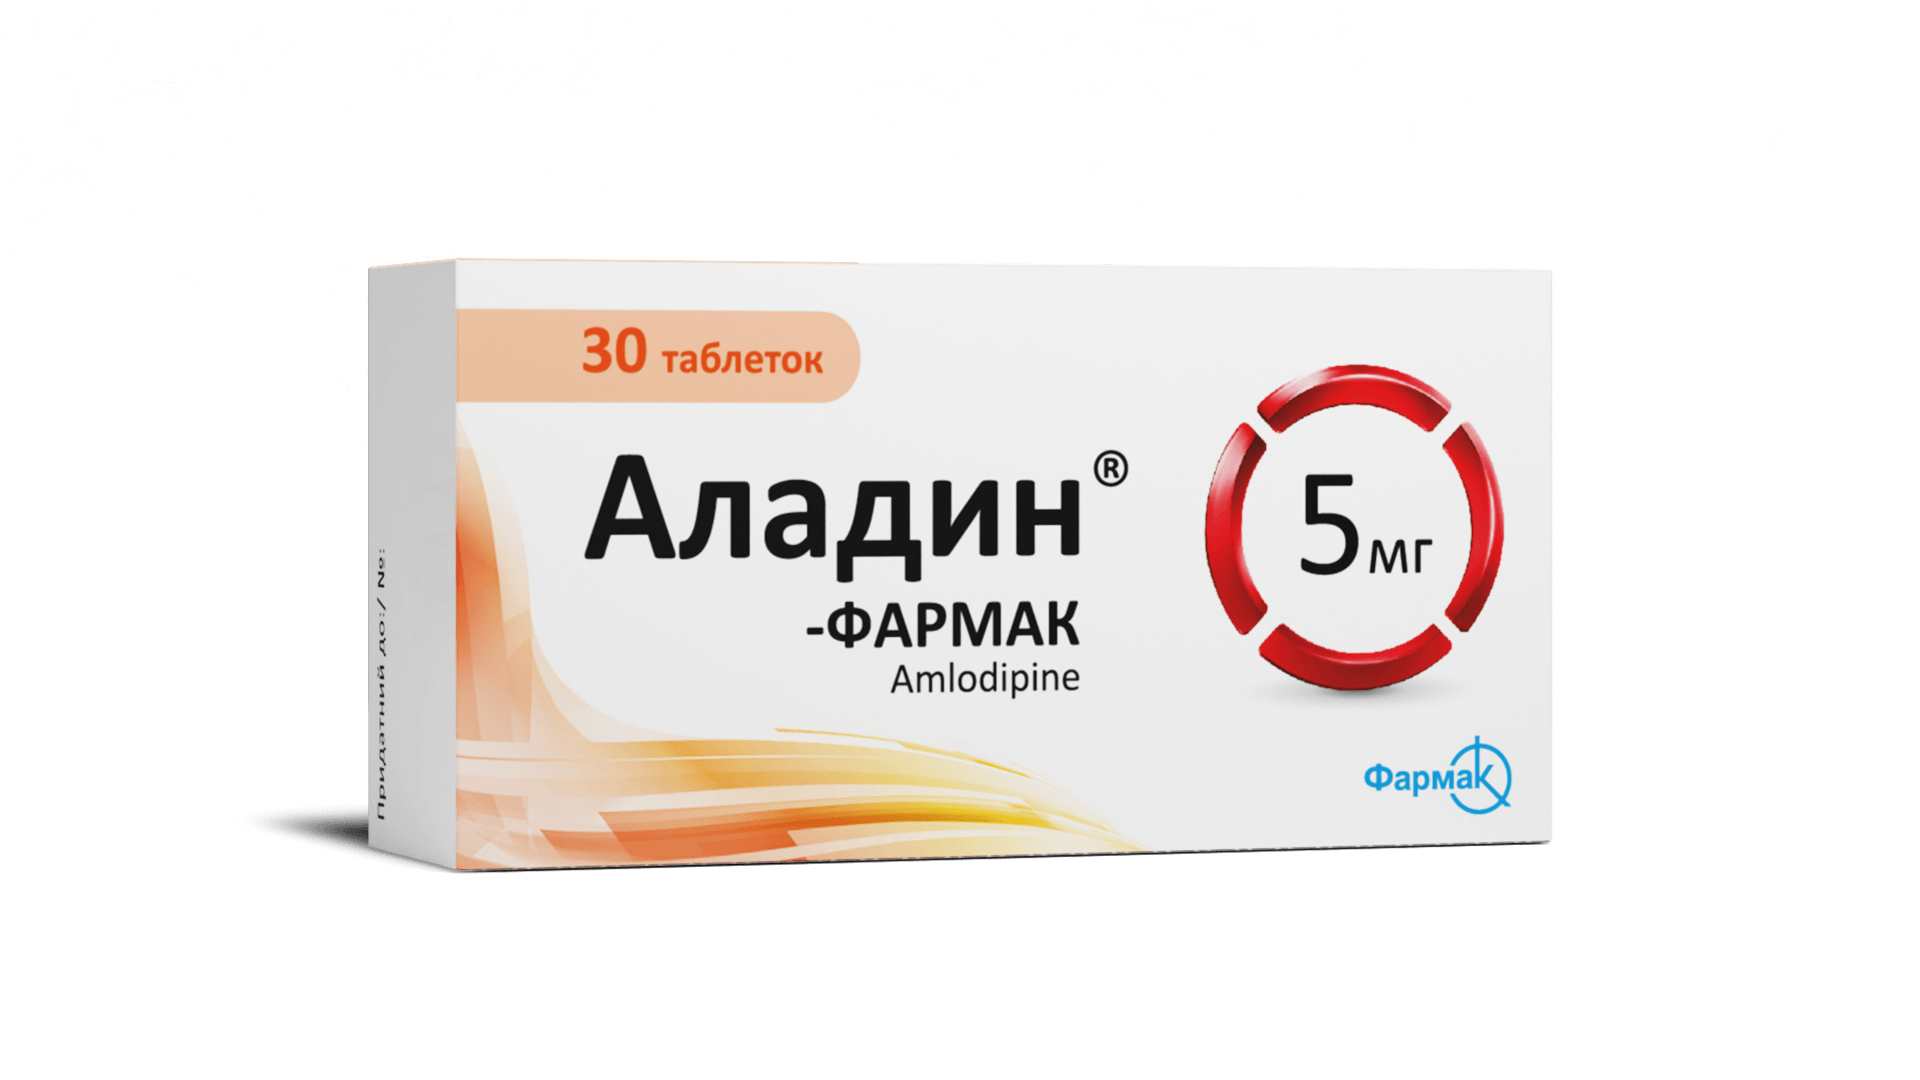 Аладин – Фармак 5 мг (1)